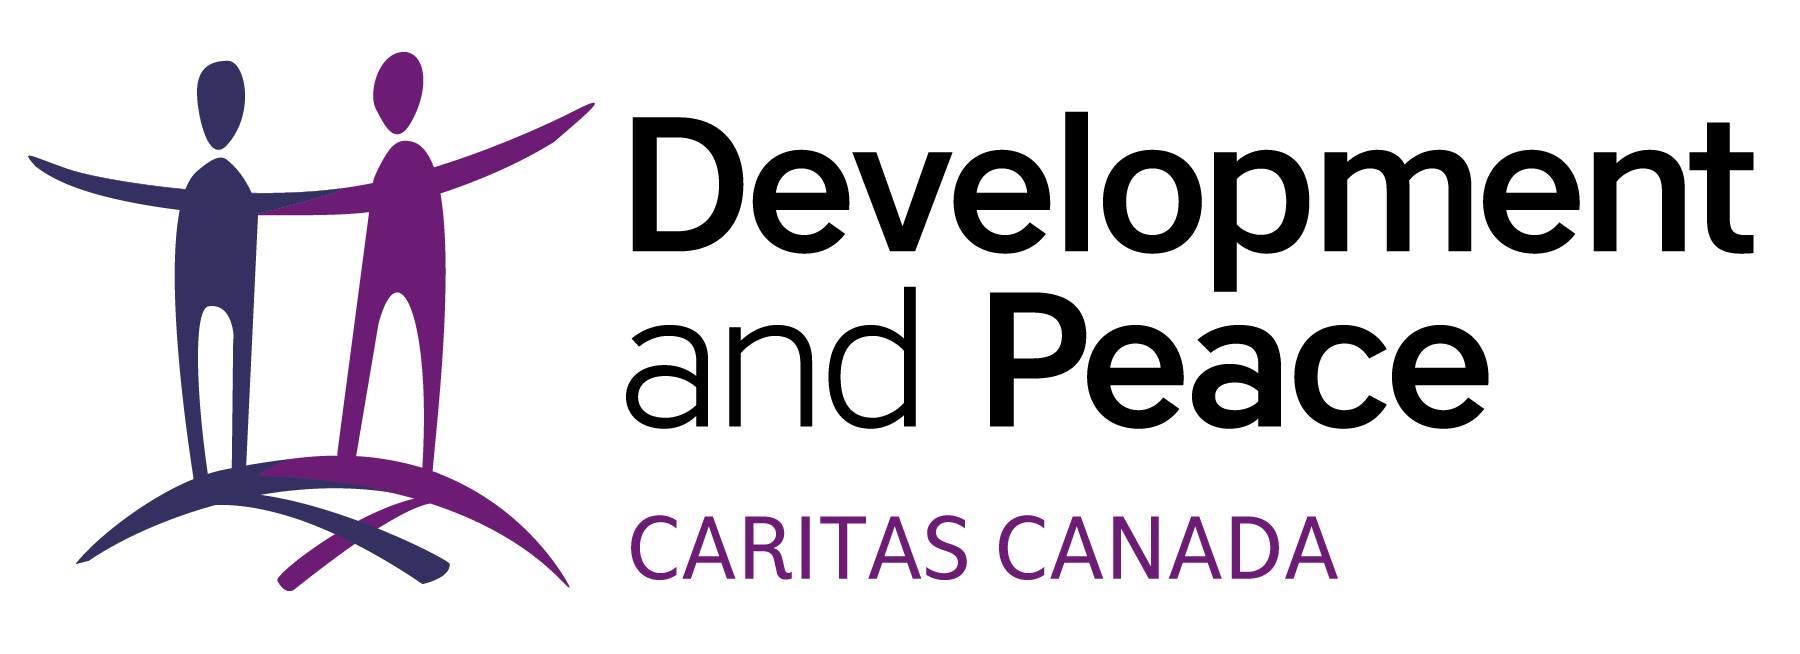 Development and Peace — Caritas Canada logo